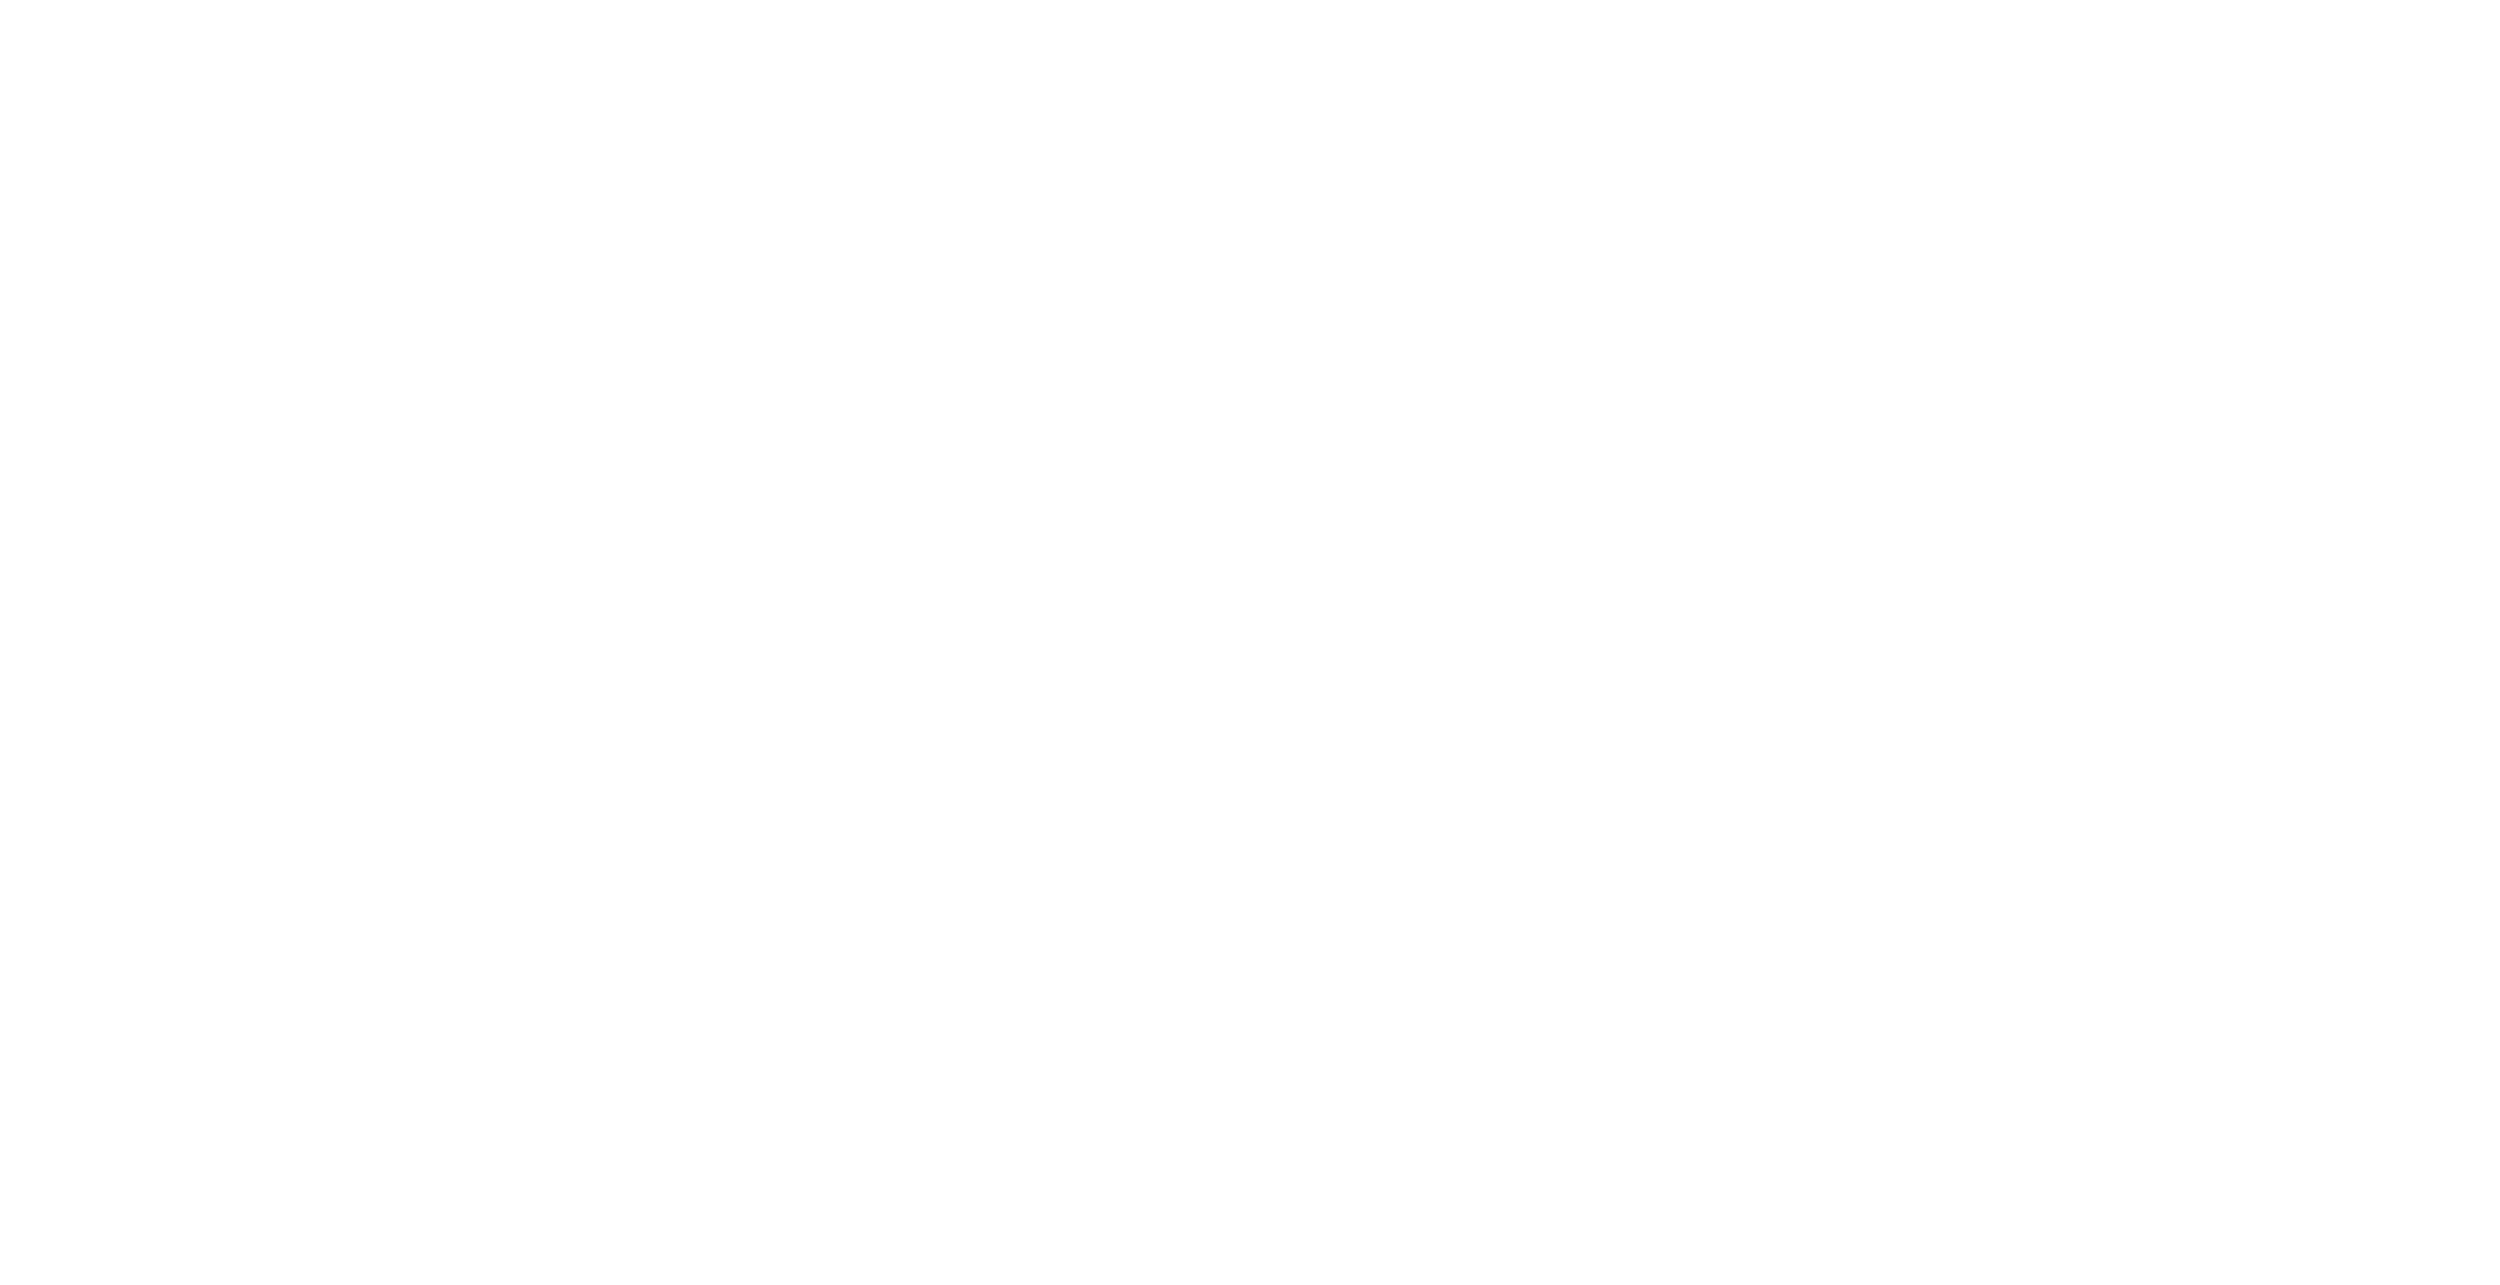 Spitz Creative